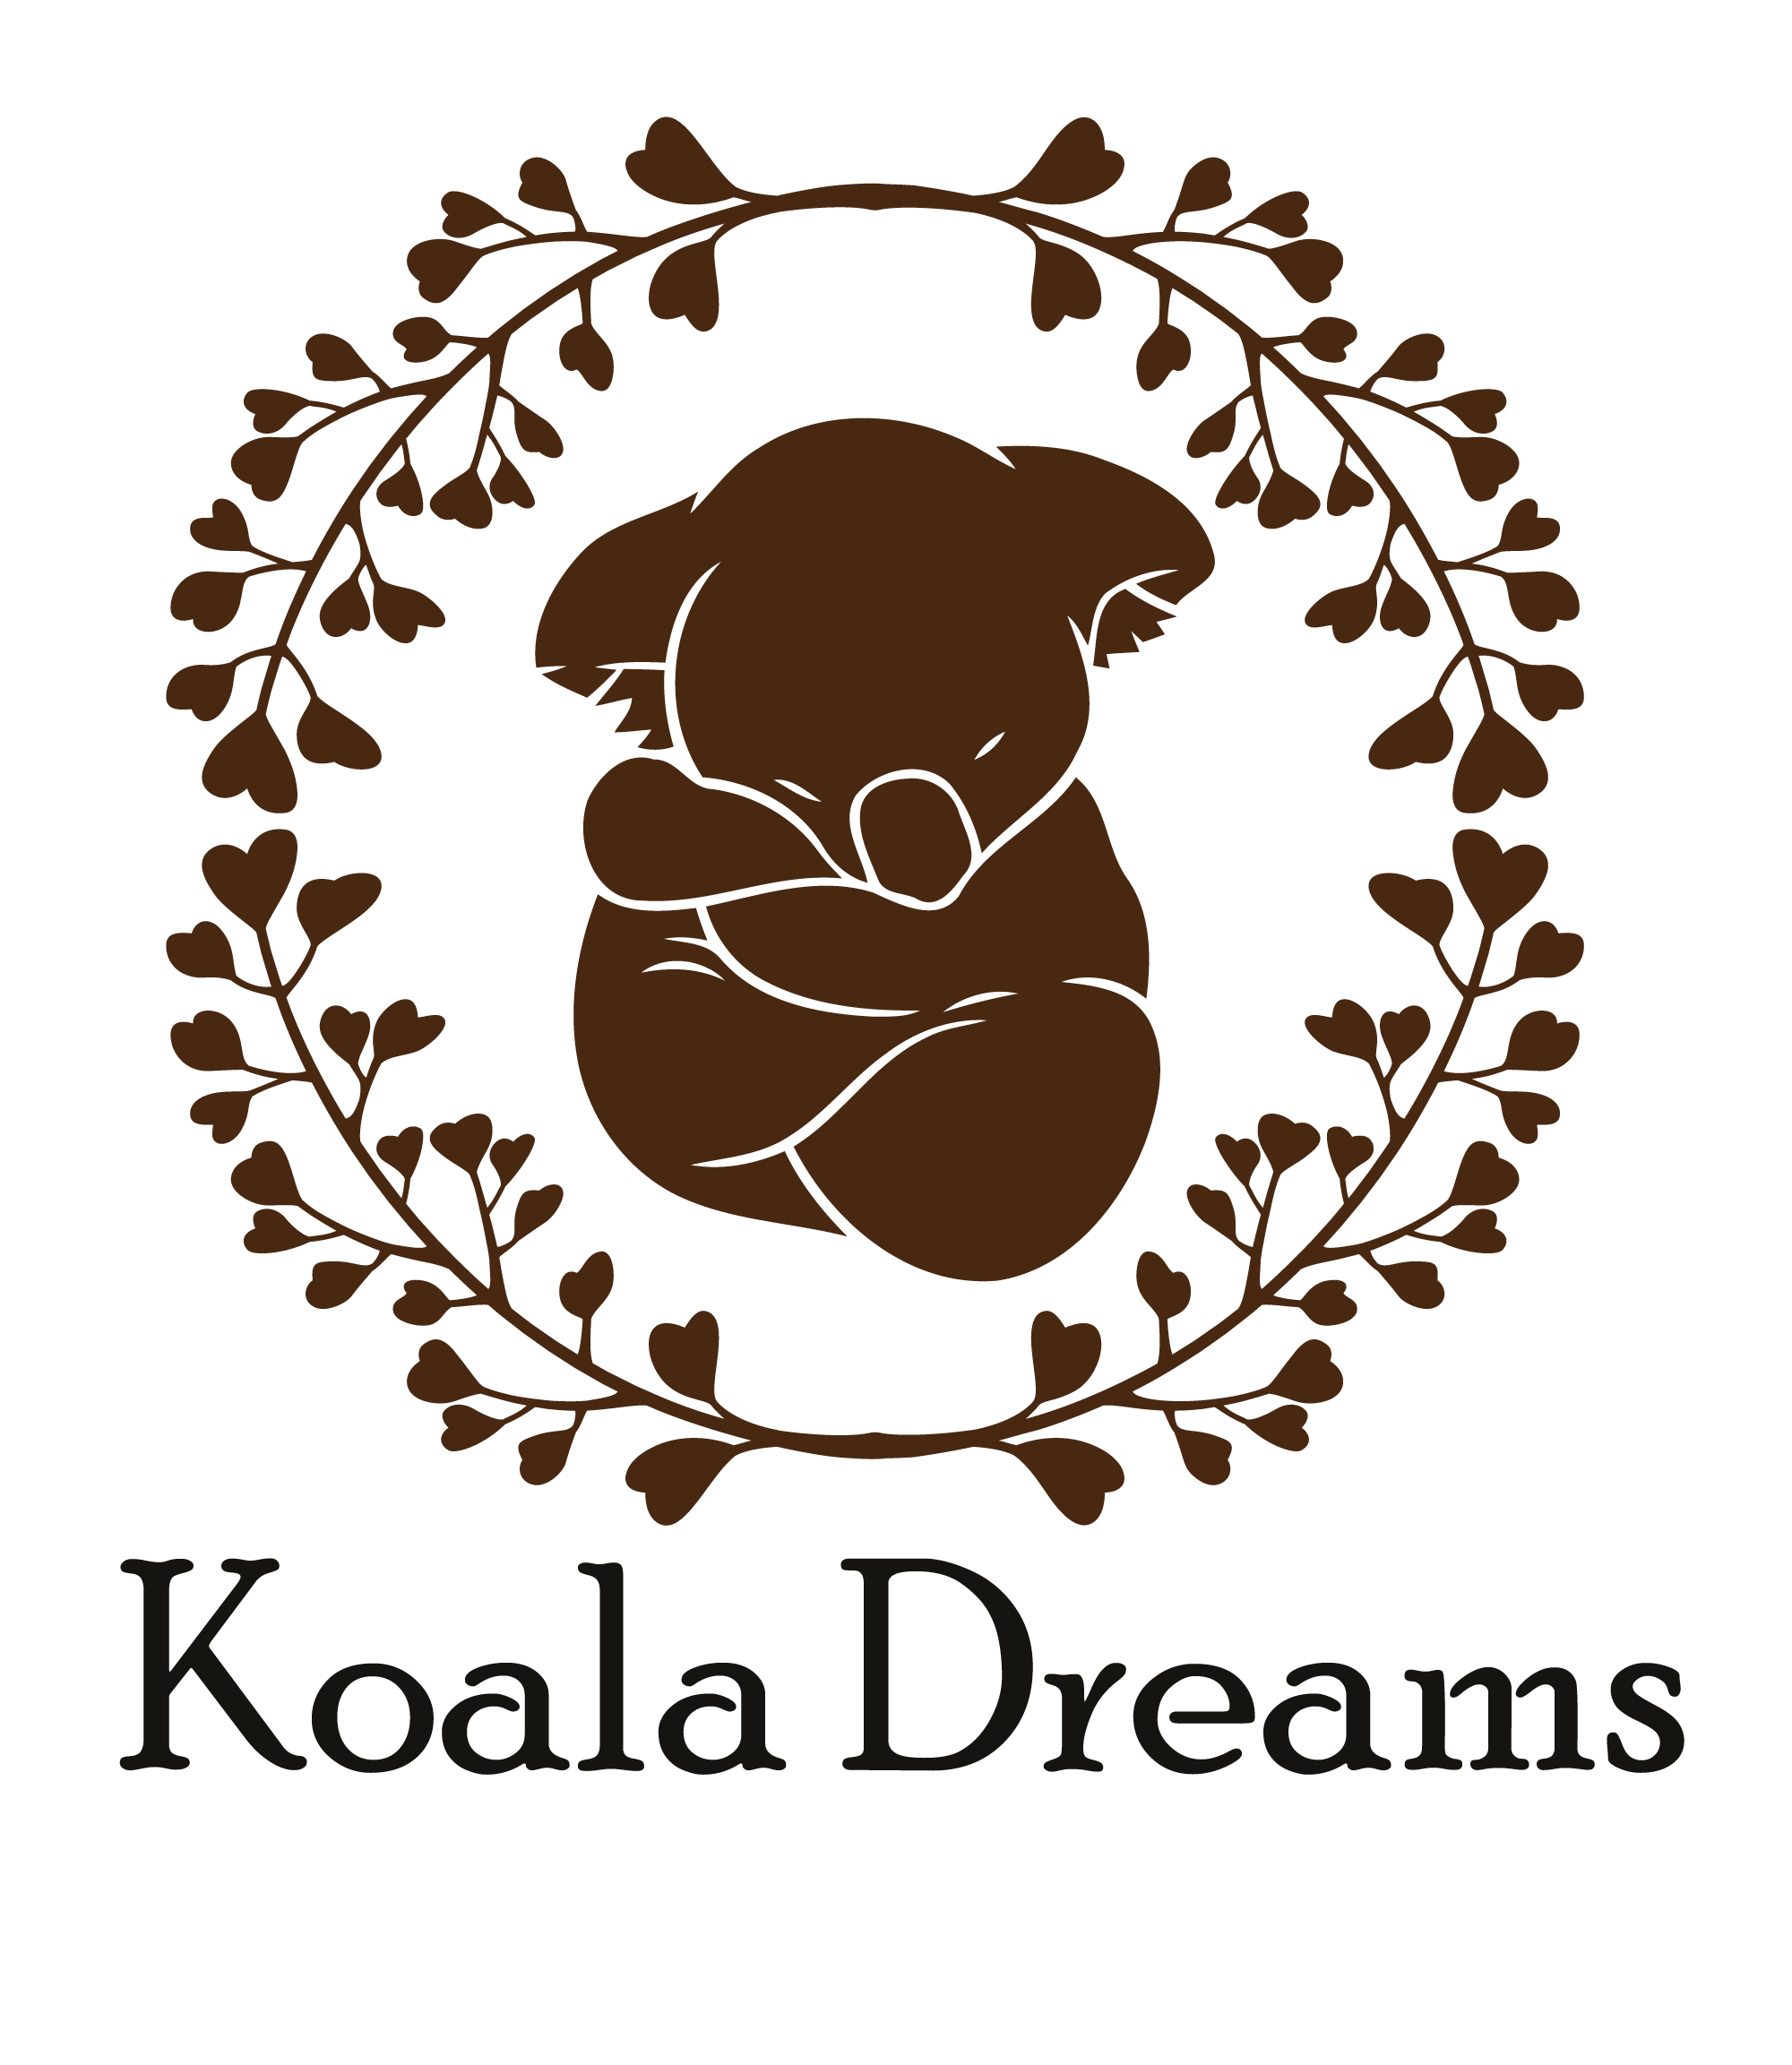 Koala Dreams Company